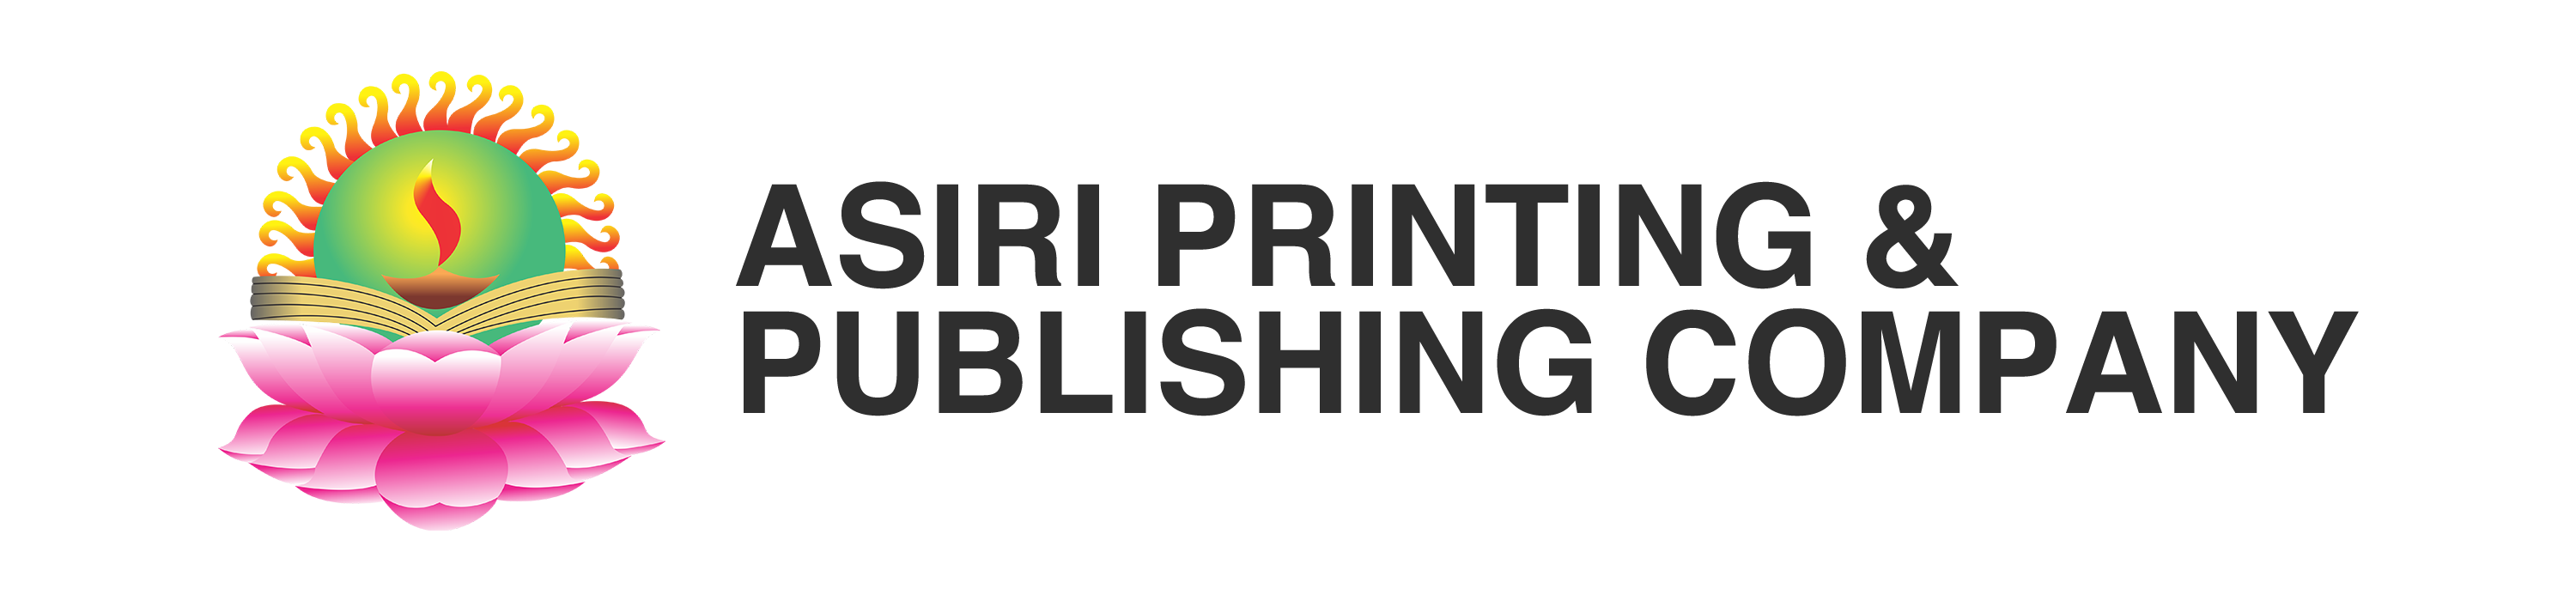 Asiri Printing & Publishing Company Logo